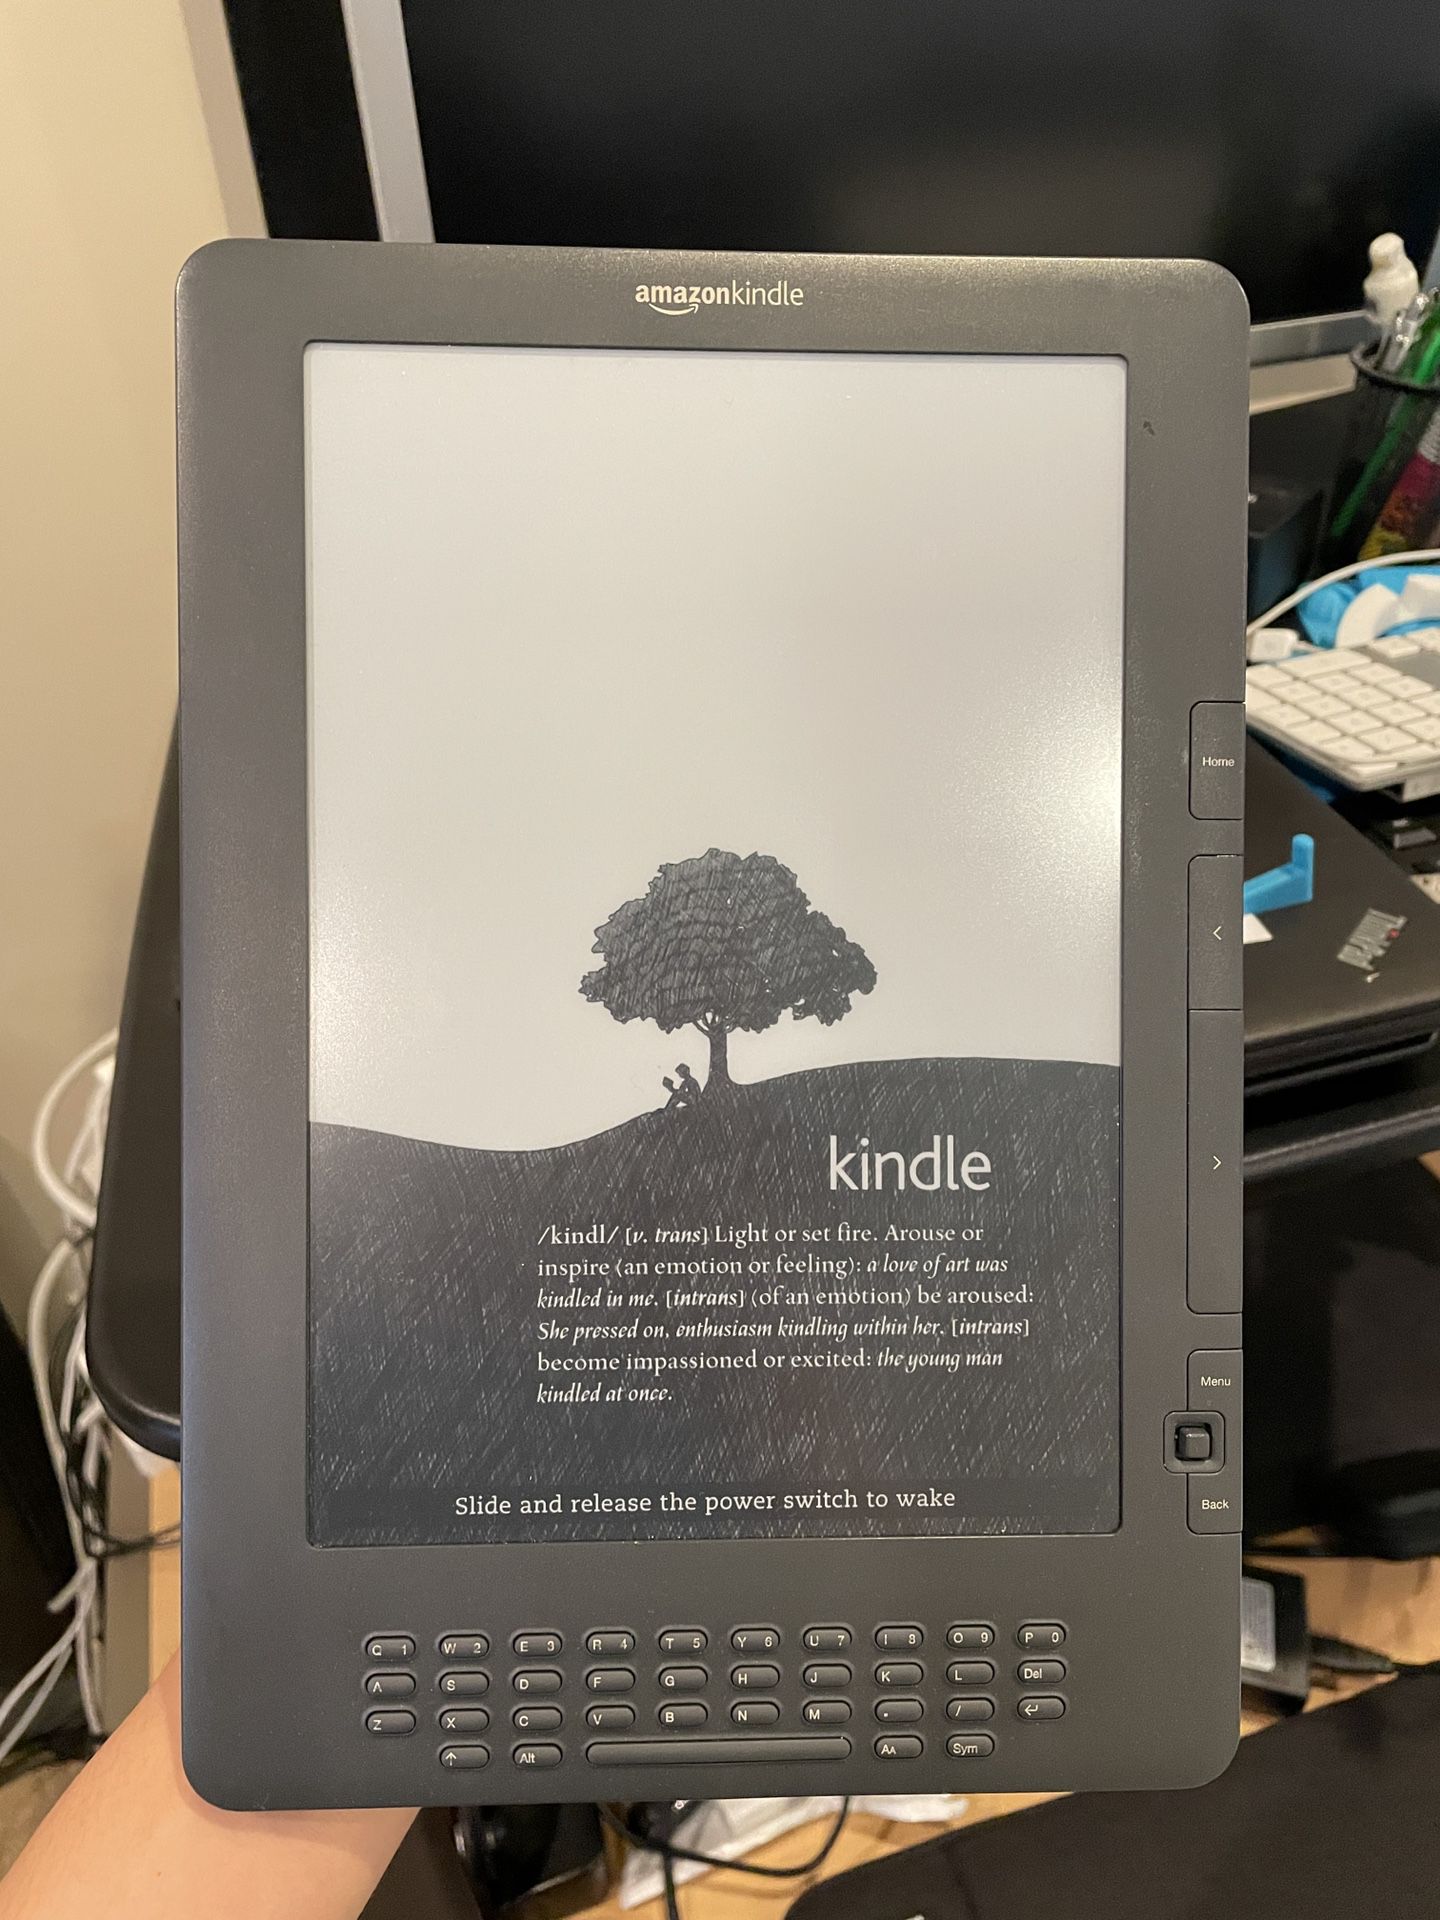 Kindle DX Graphite 9.7” E-reader